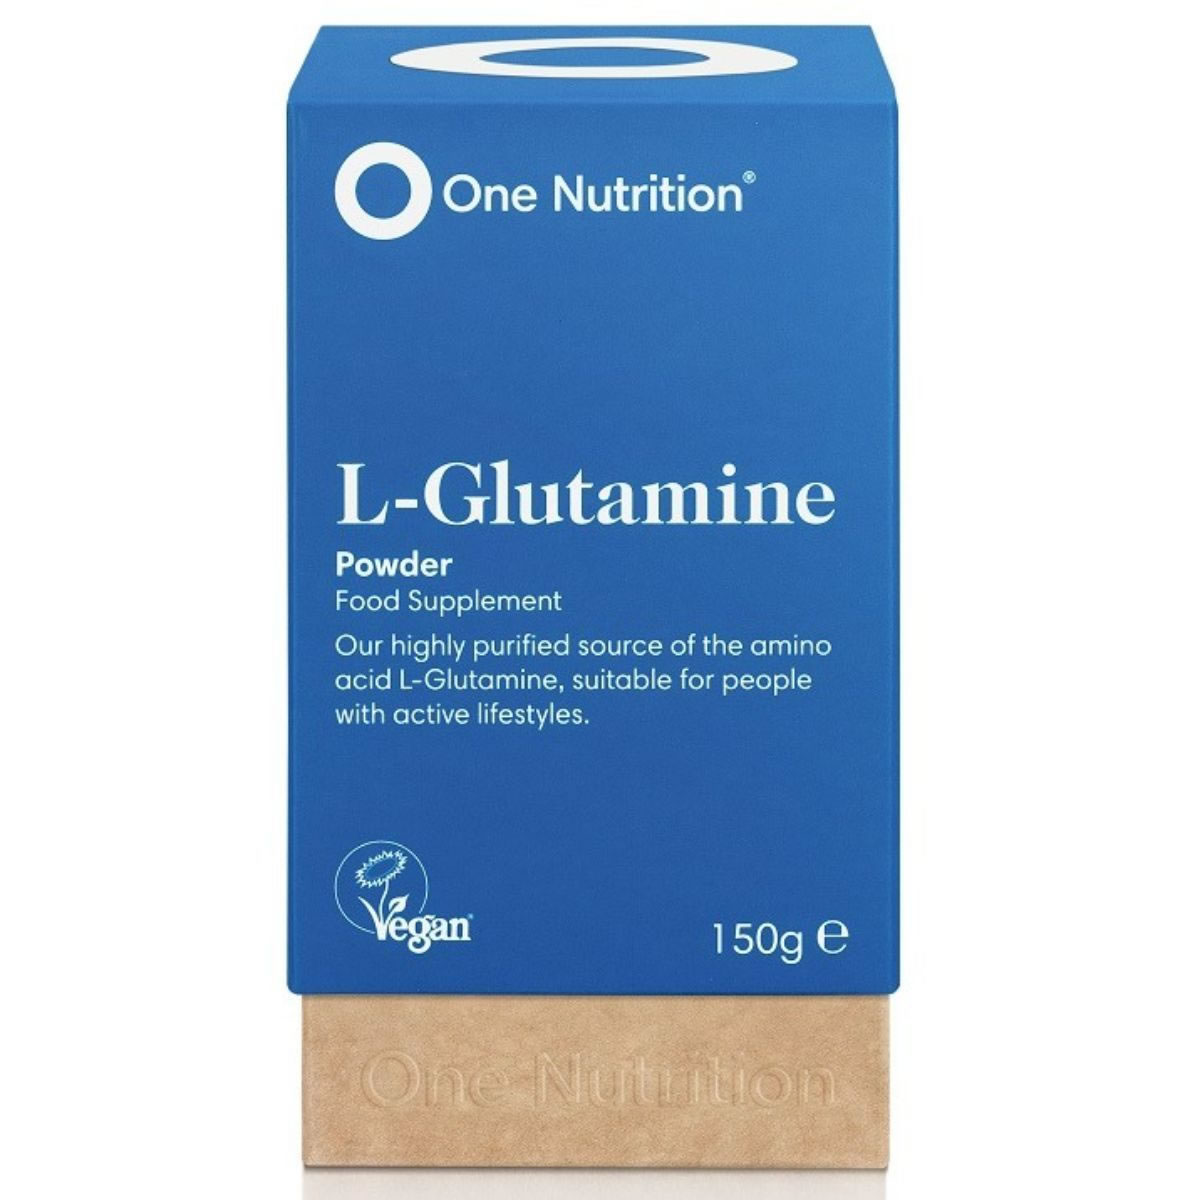 L-Glutamine Powder, 150g